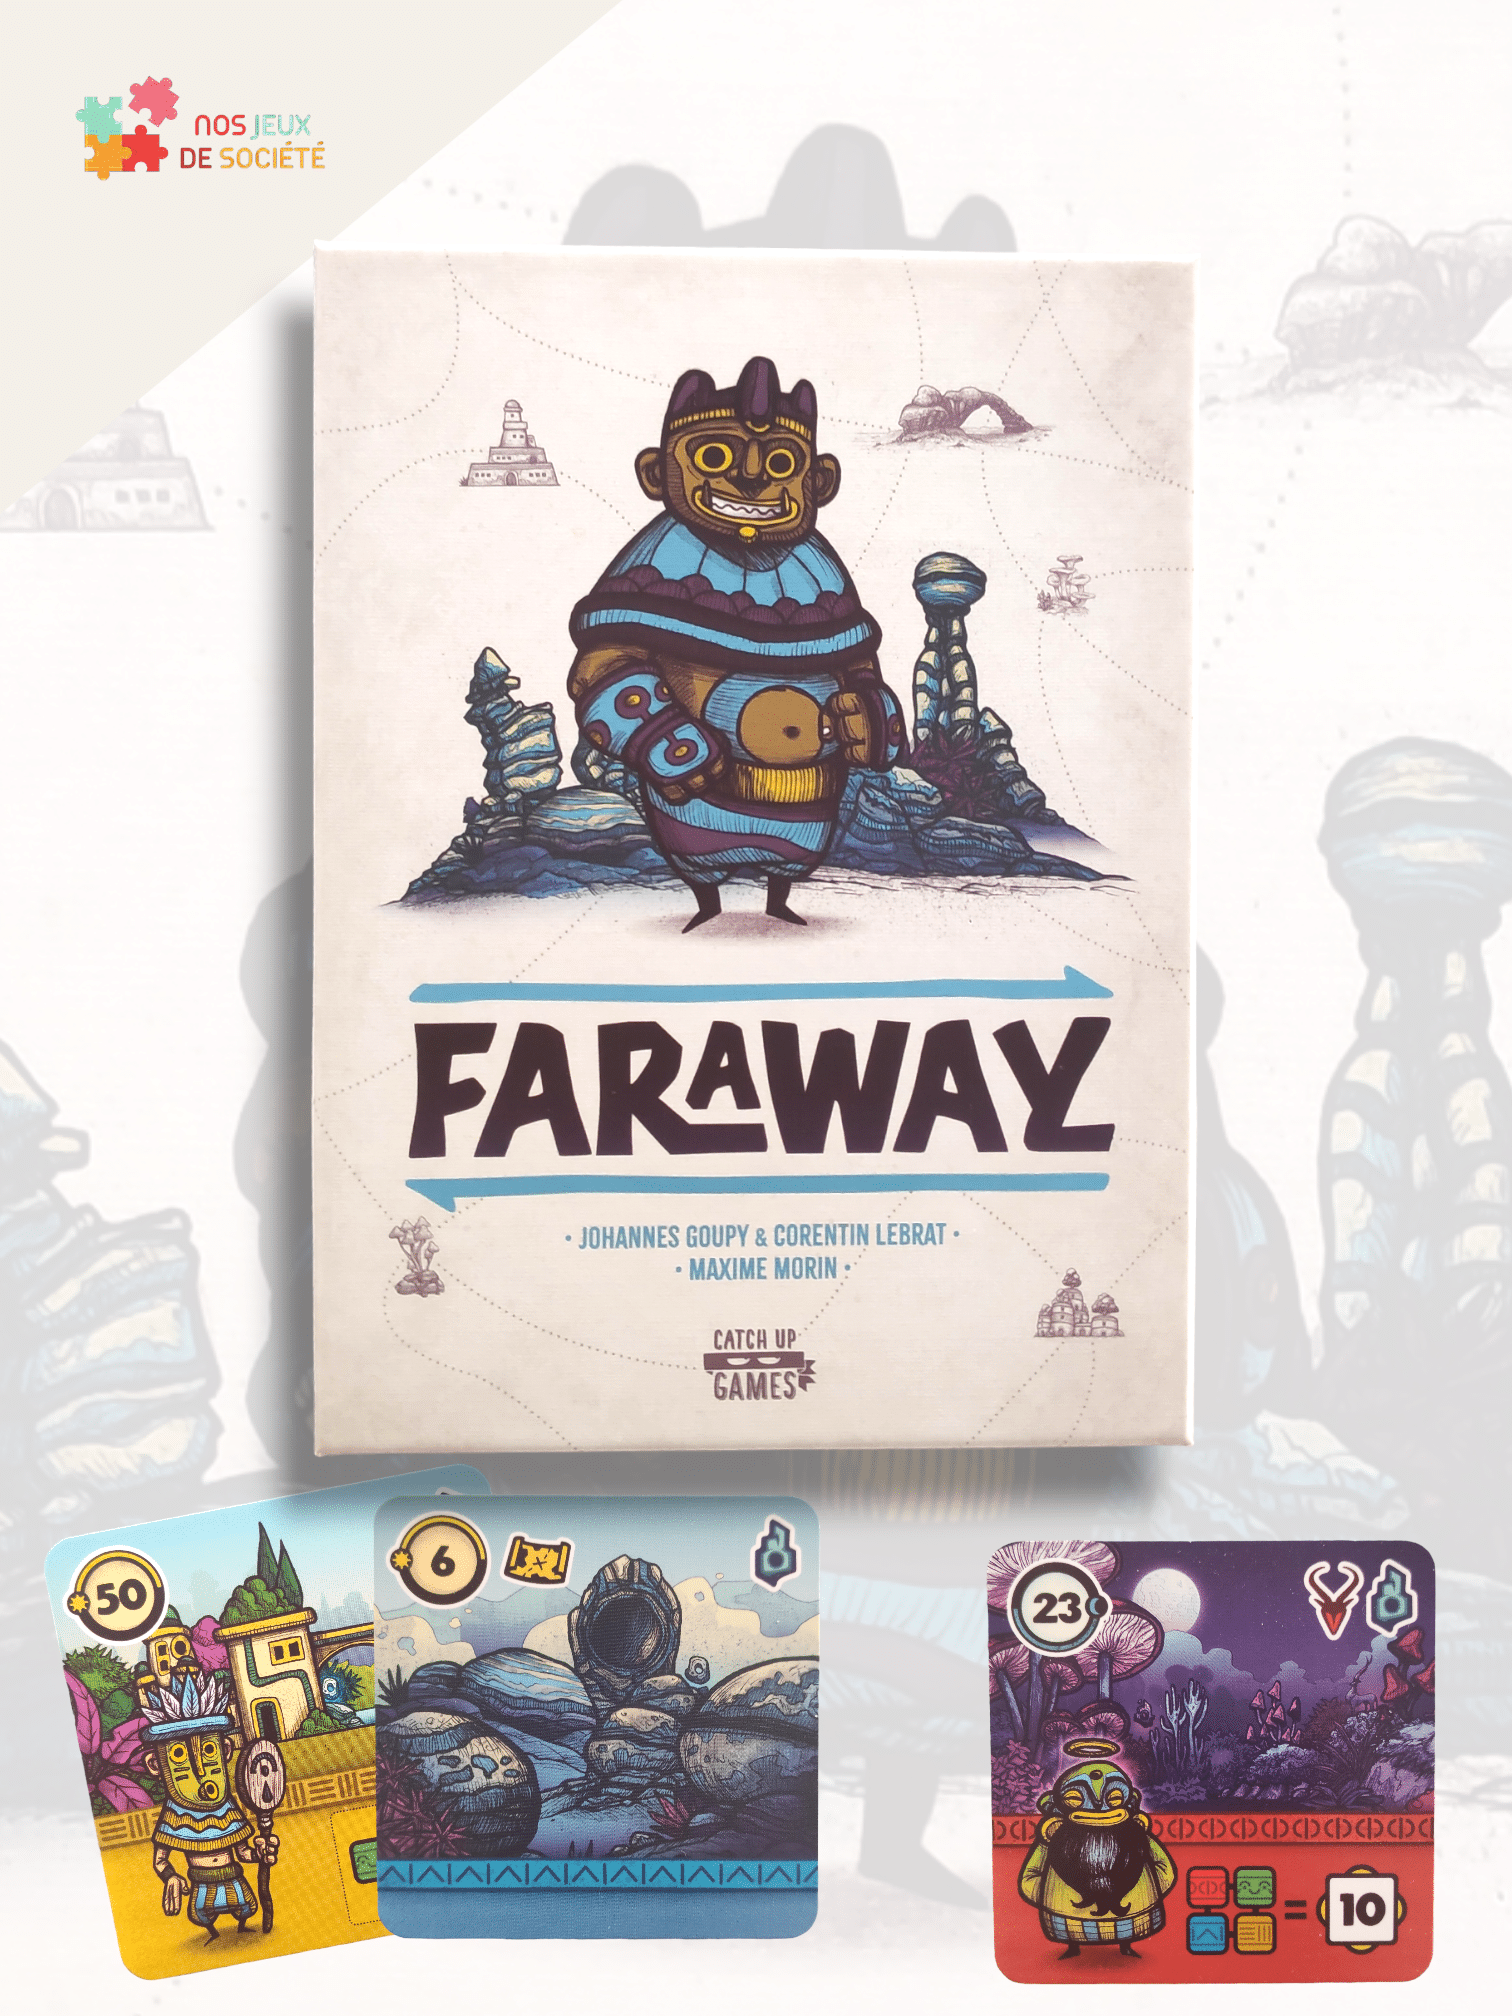 Faraway : Test, avis et conseils.